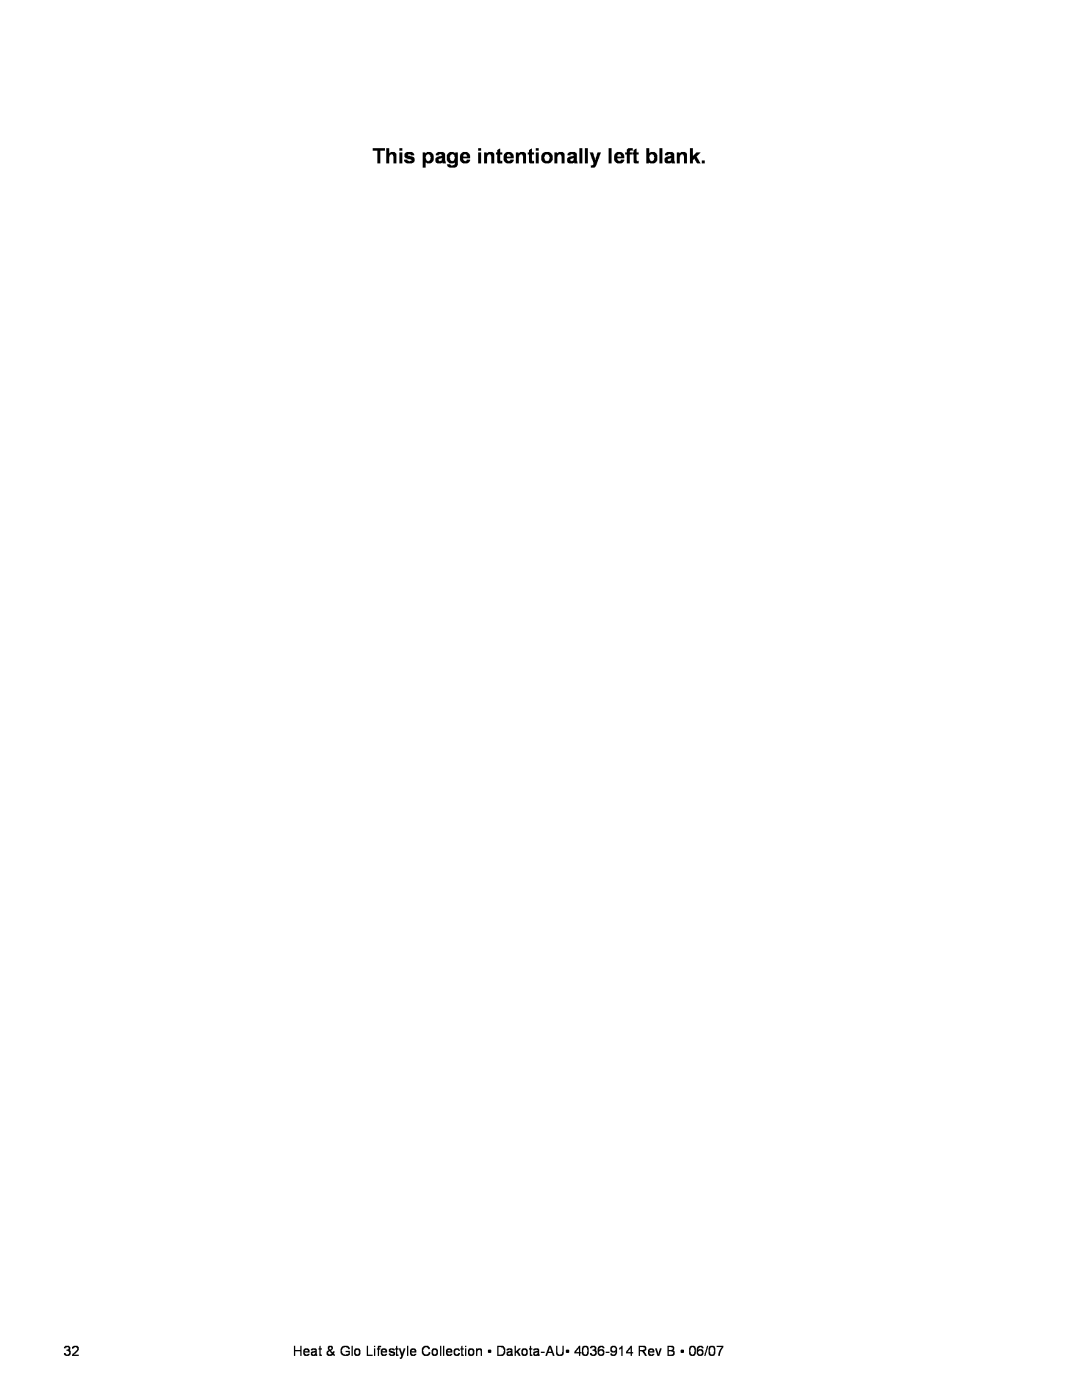 Heat & Glo LifeStyle DAKOTA-AU manual This page intentionally left blank 